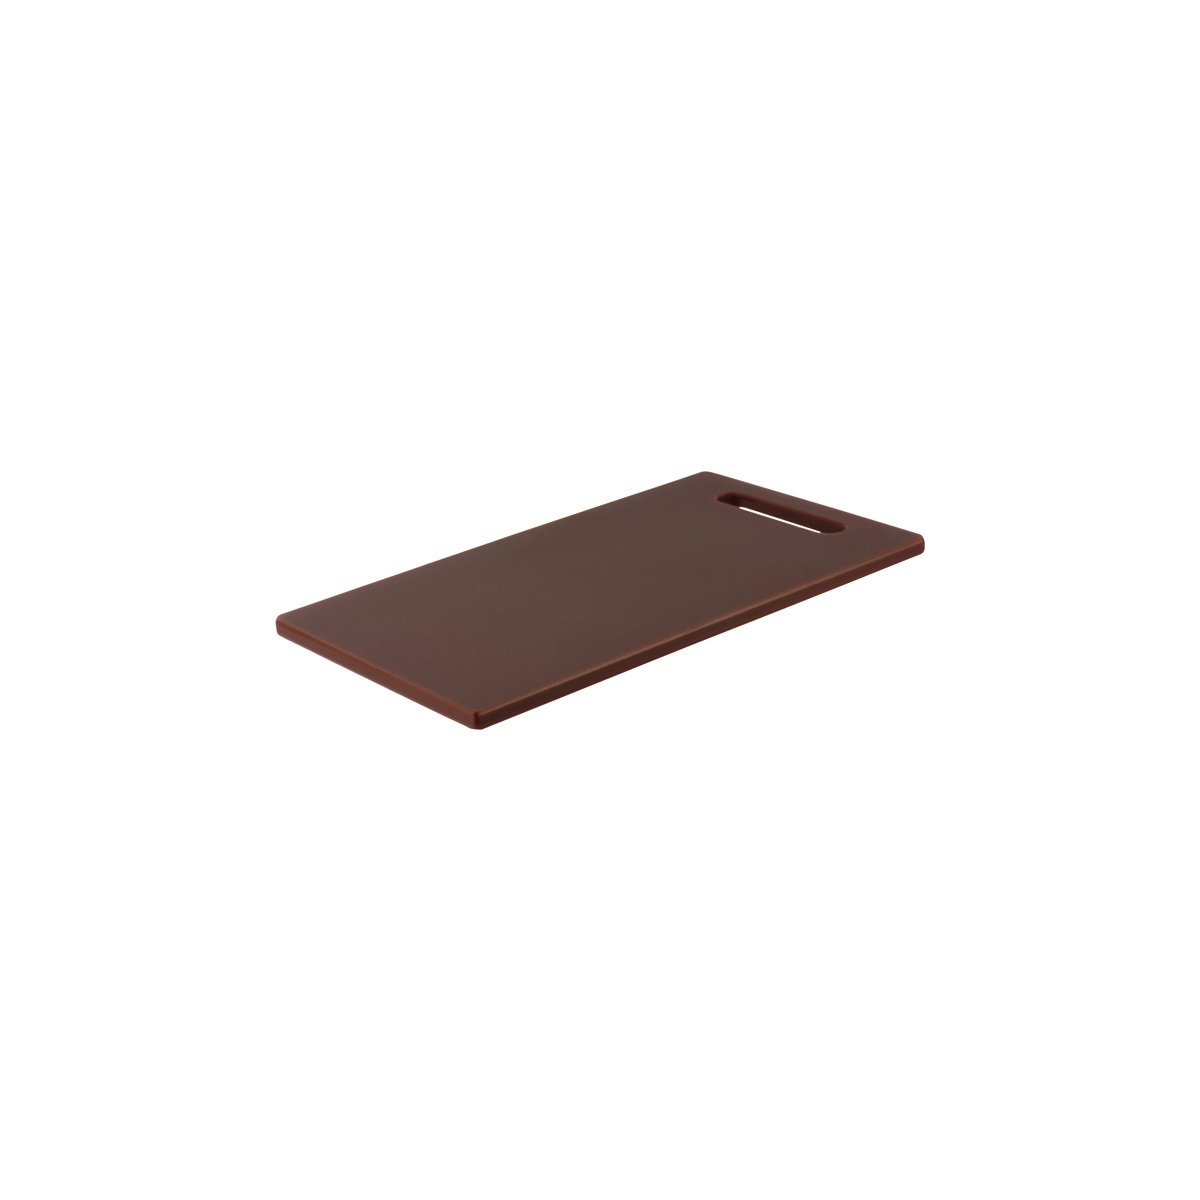 04341 Chef Inox Cutting Board Polyethylene Brown with Handle 230x380x12mm Tomkin Australia Hospitality Supplies